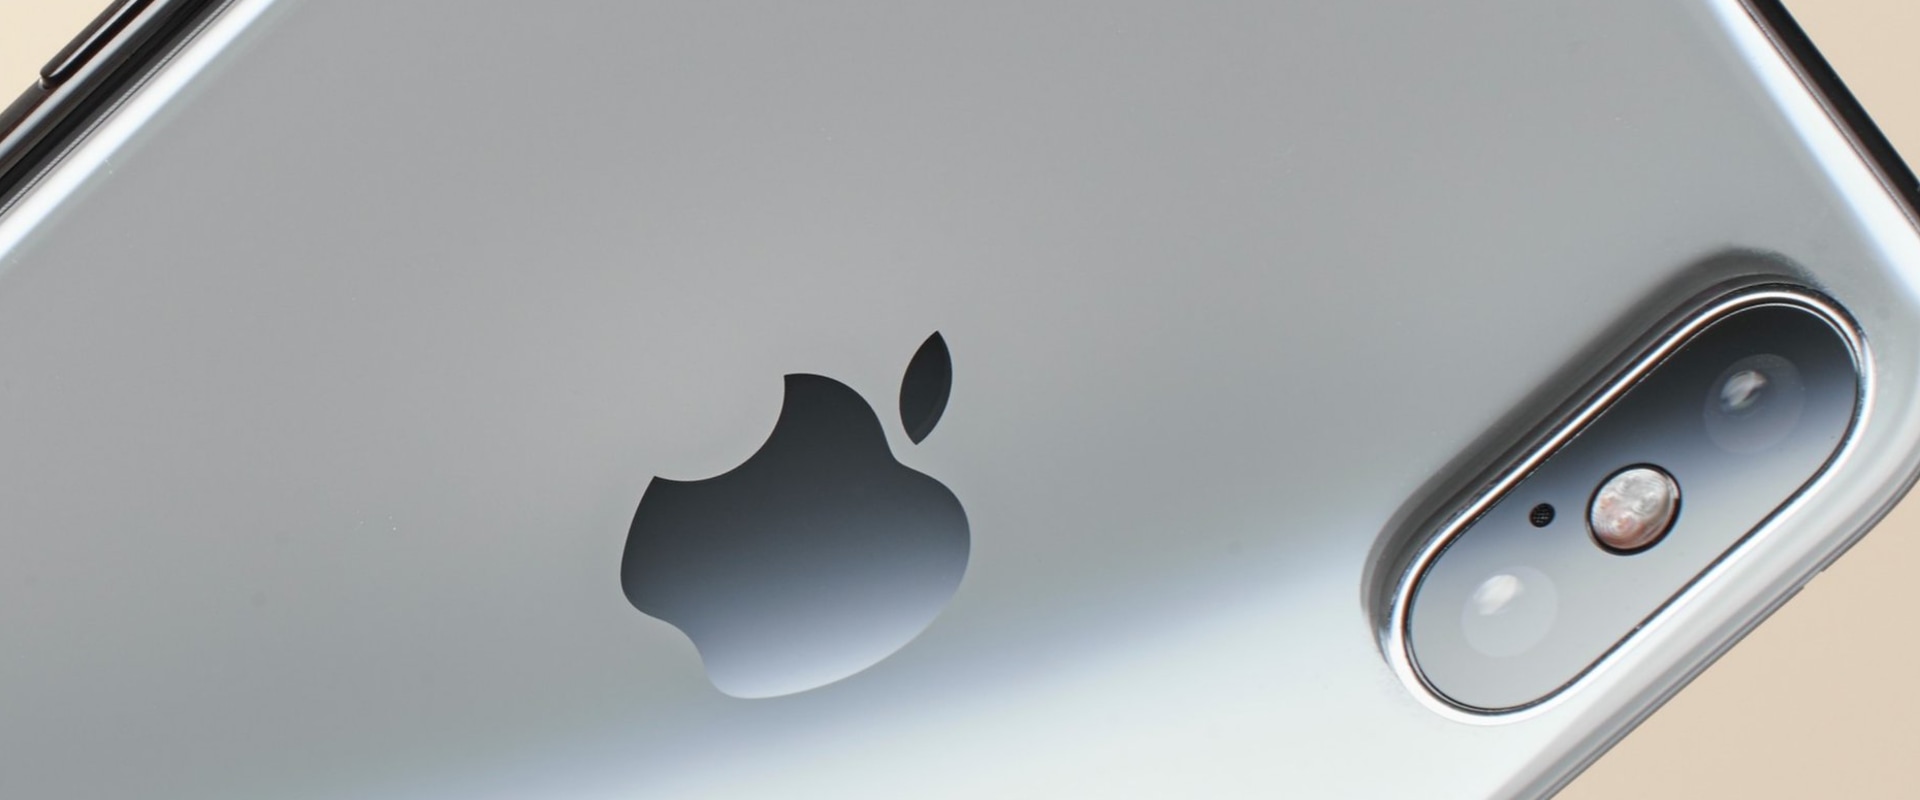 Does apple slow down older iphone models?